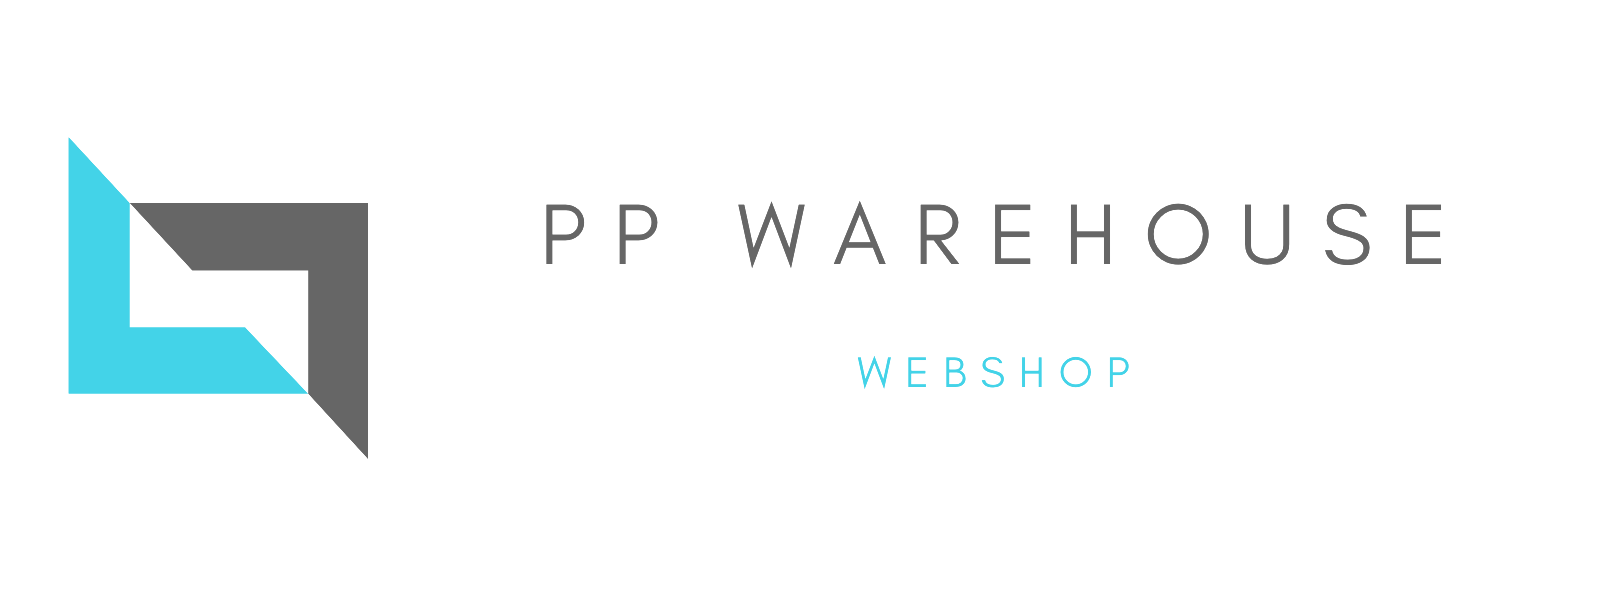 PP Warehouse